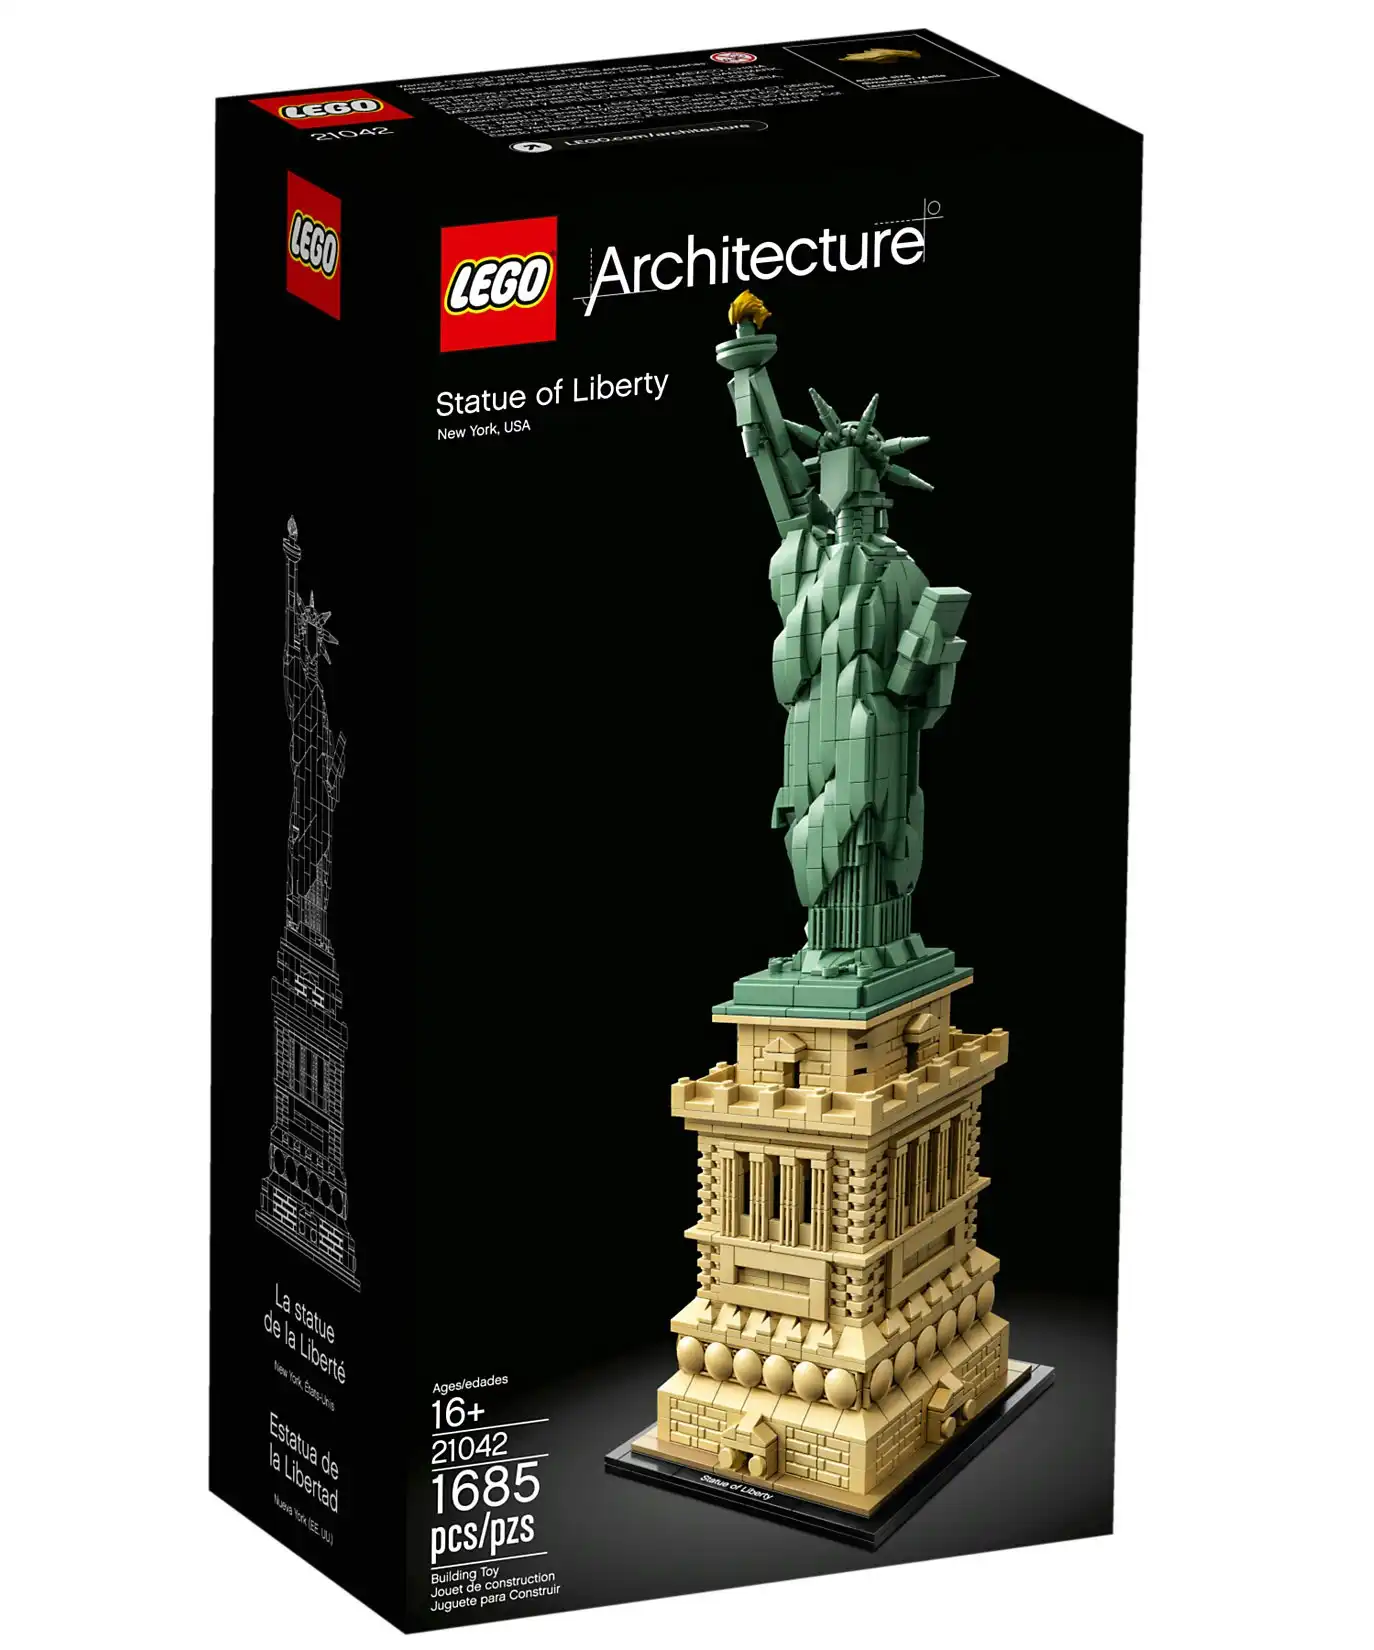 LEGO 21042 Statue of Liberty - Architecture